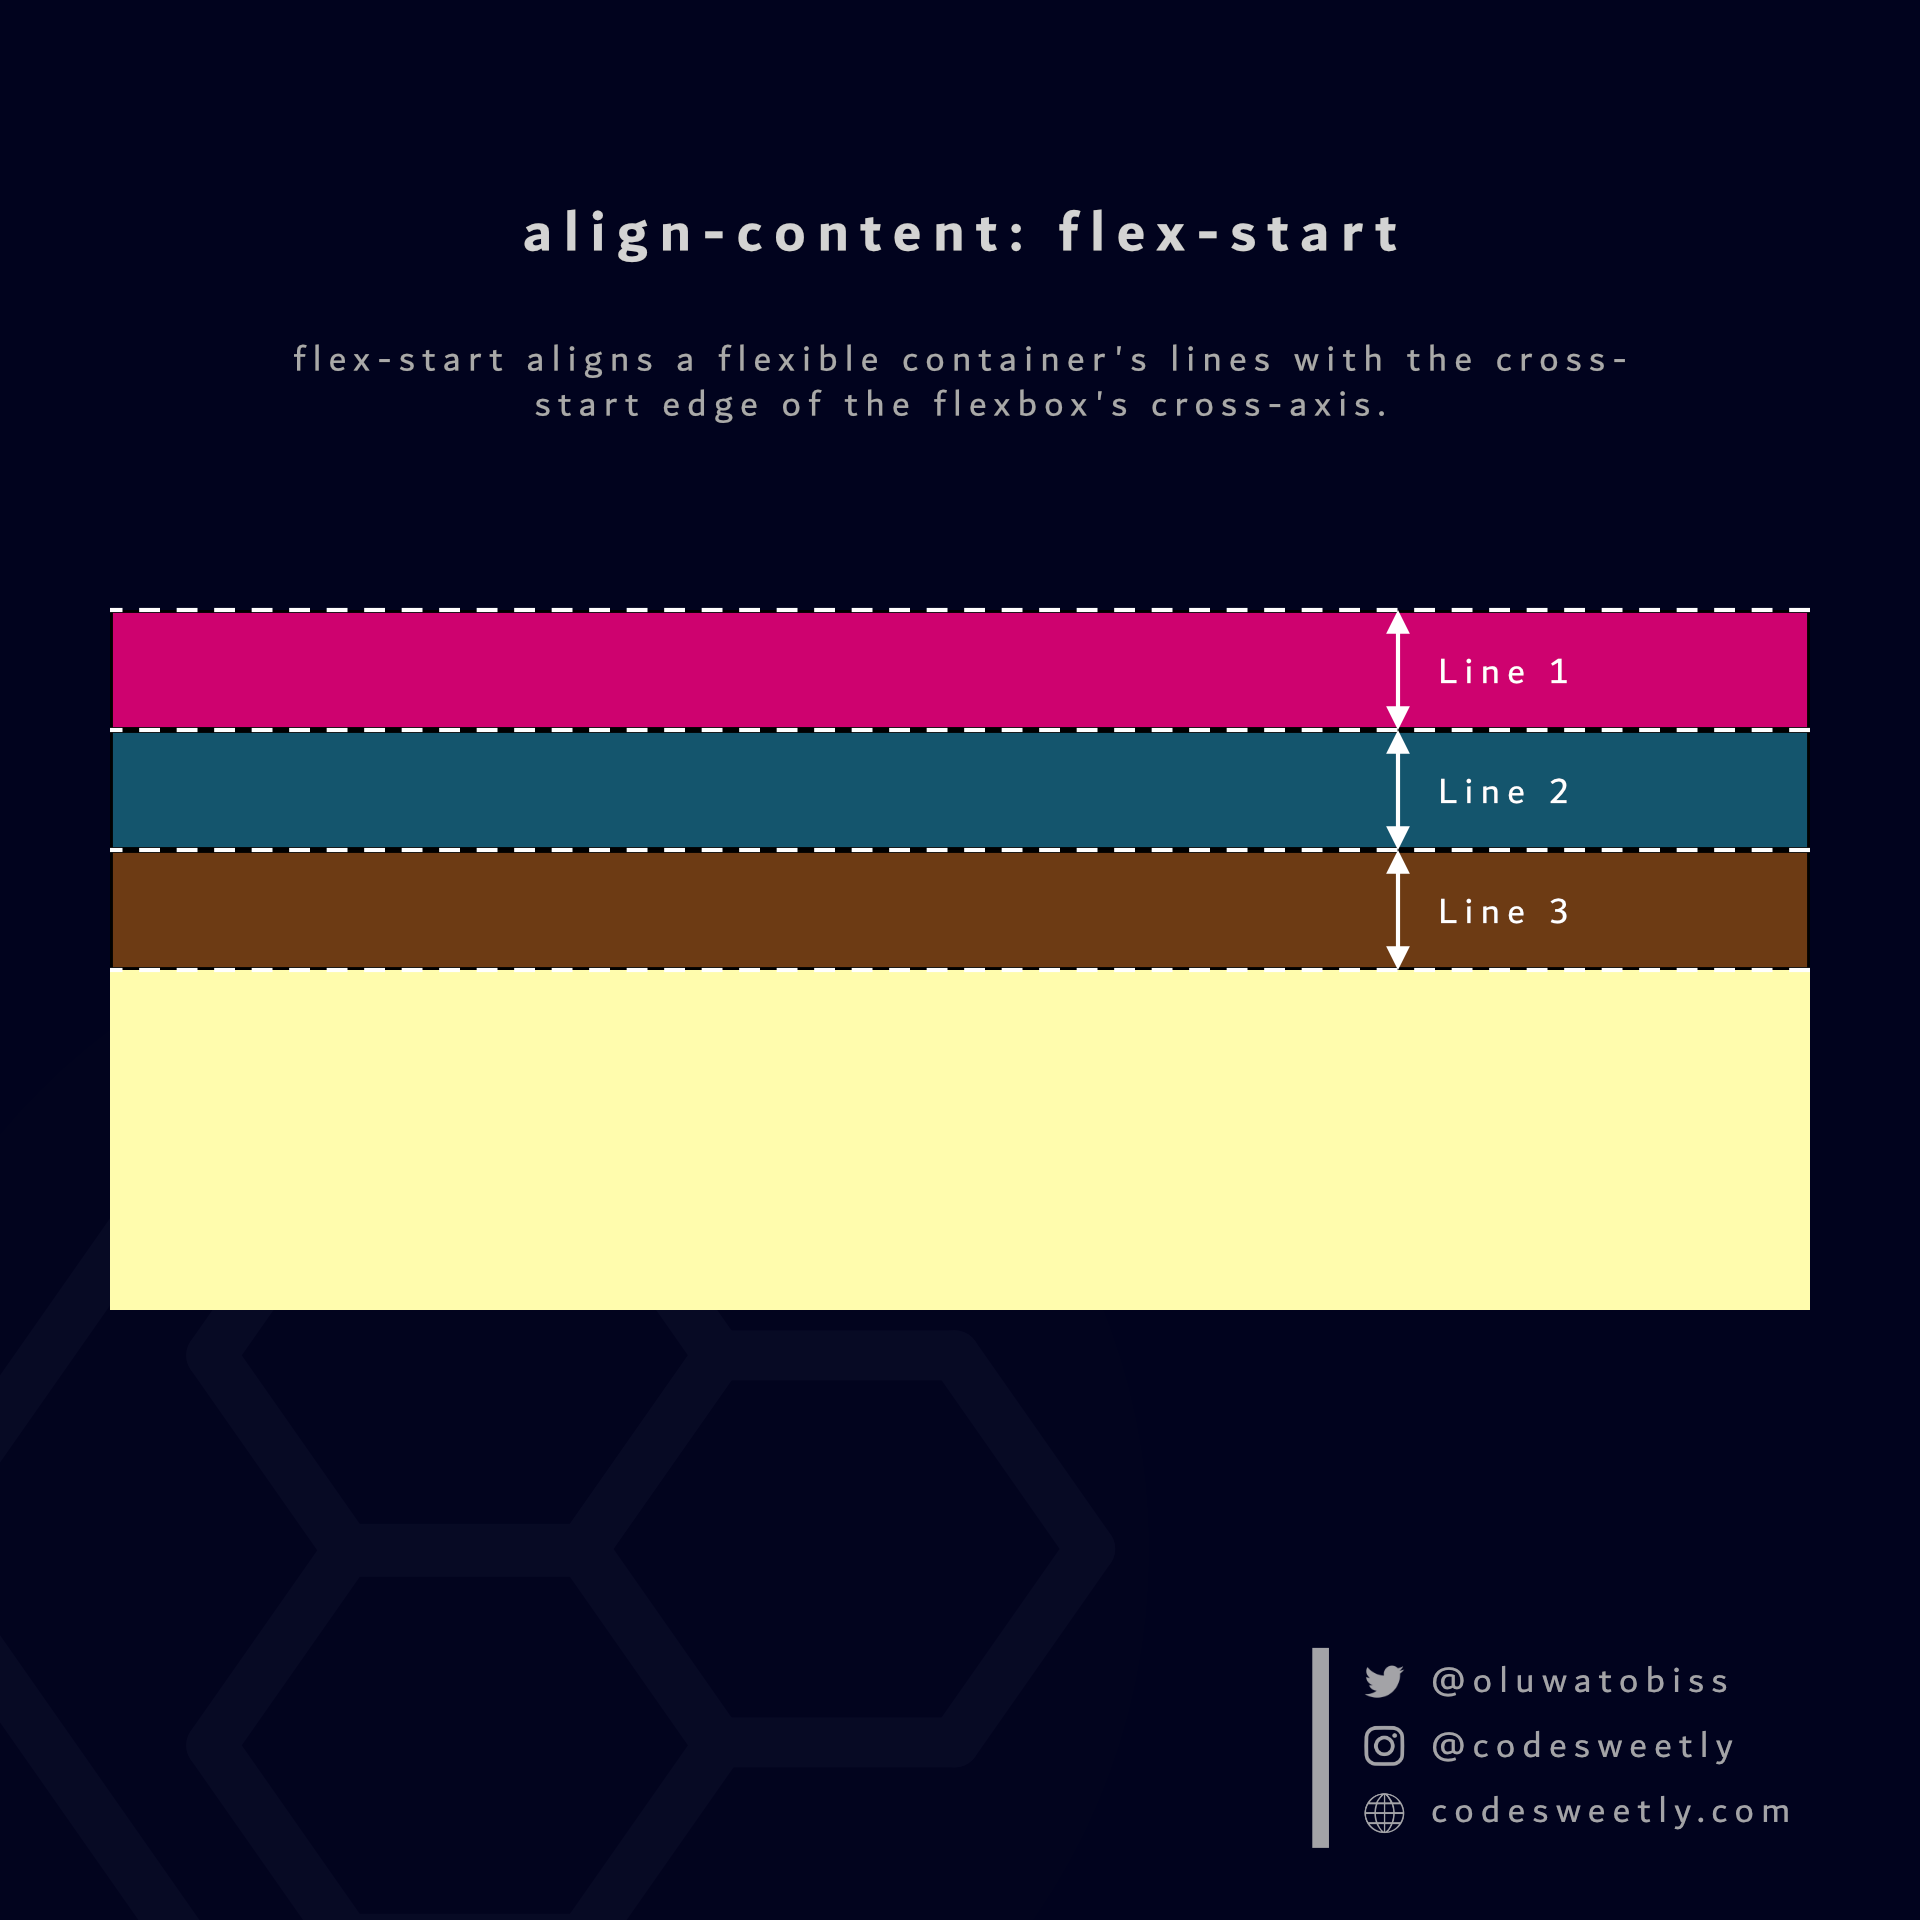 align-content's flex-start value aligns flexbox's lines to the container's cross-start edge